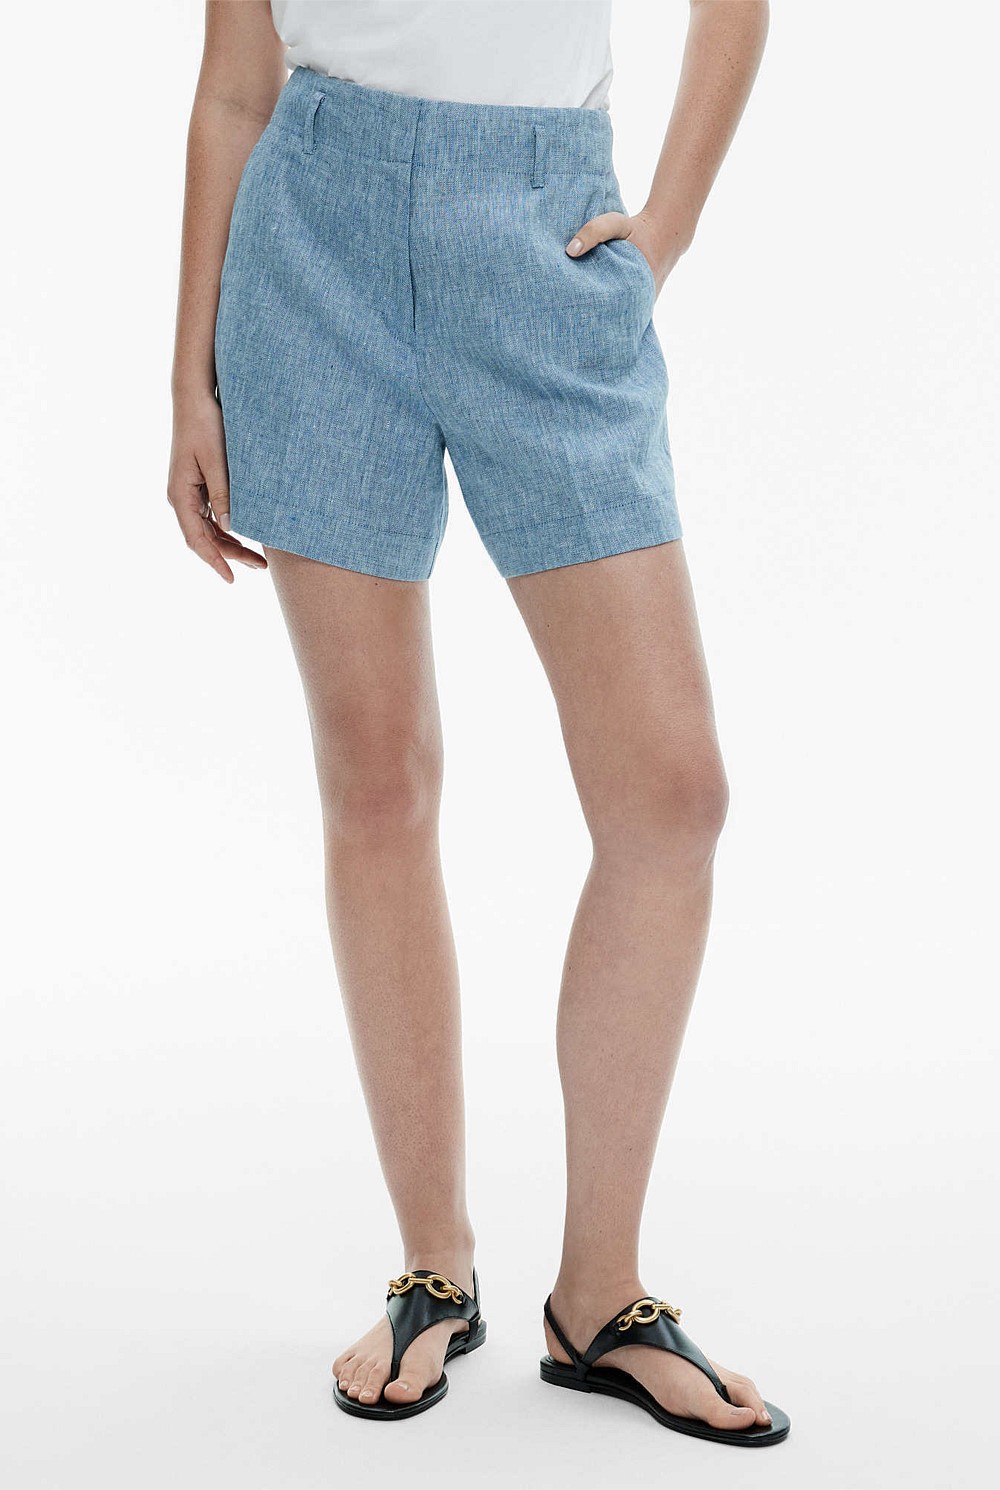 Womens Slip Shorts High Waisted for Under Dresses Summer Shorts 3-Pack